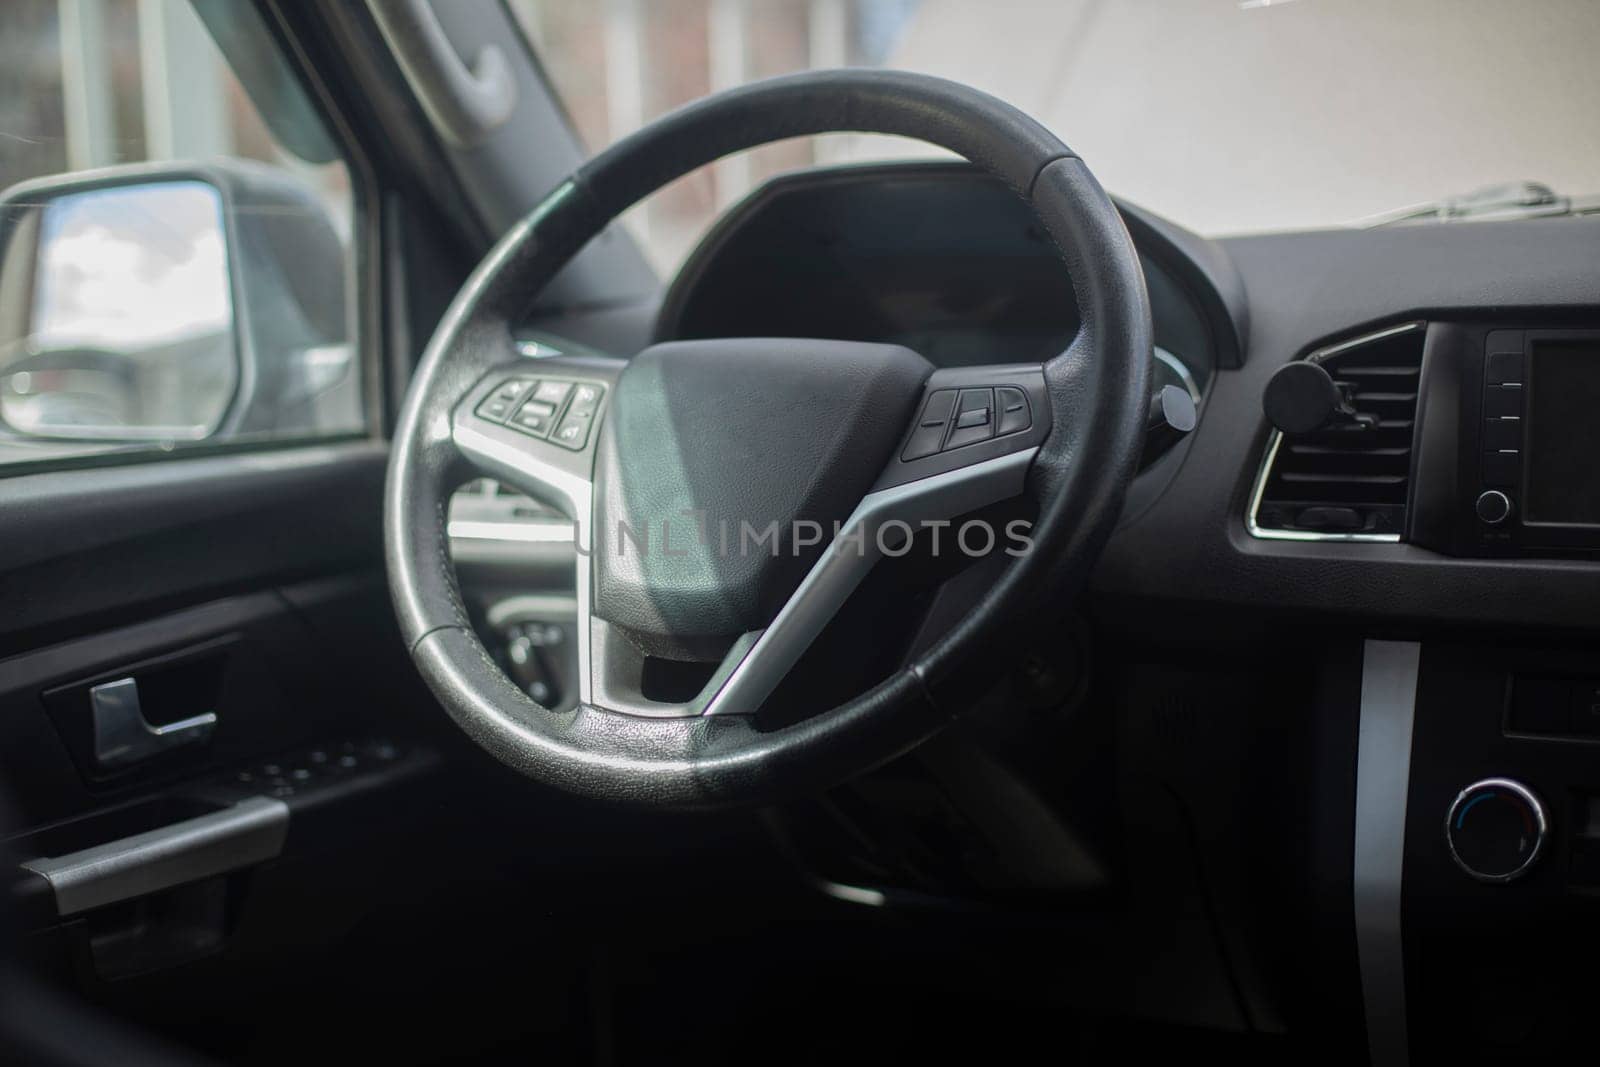 Wheel of car. Black Steering Wheel. Machine Interior Parts. Transport from inside.